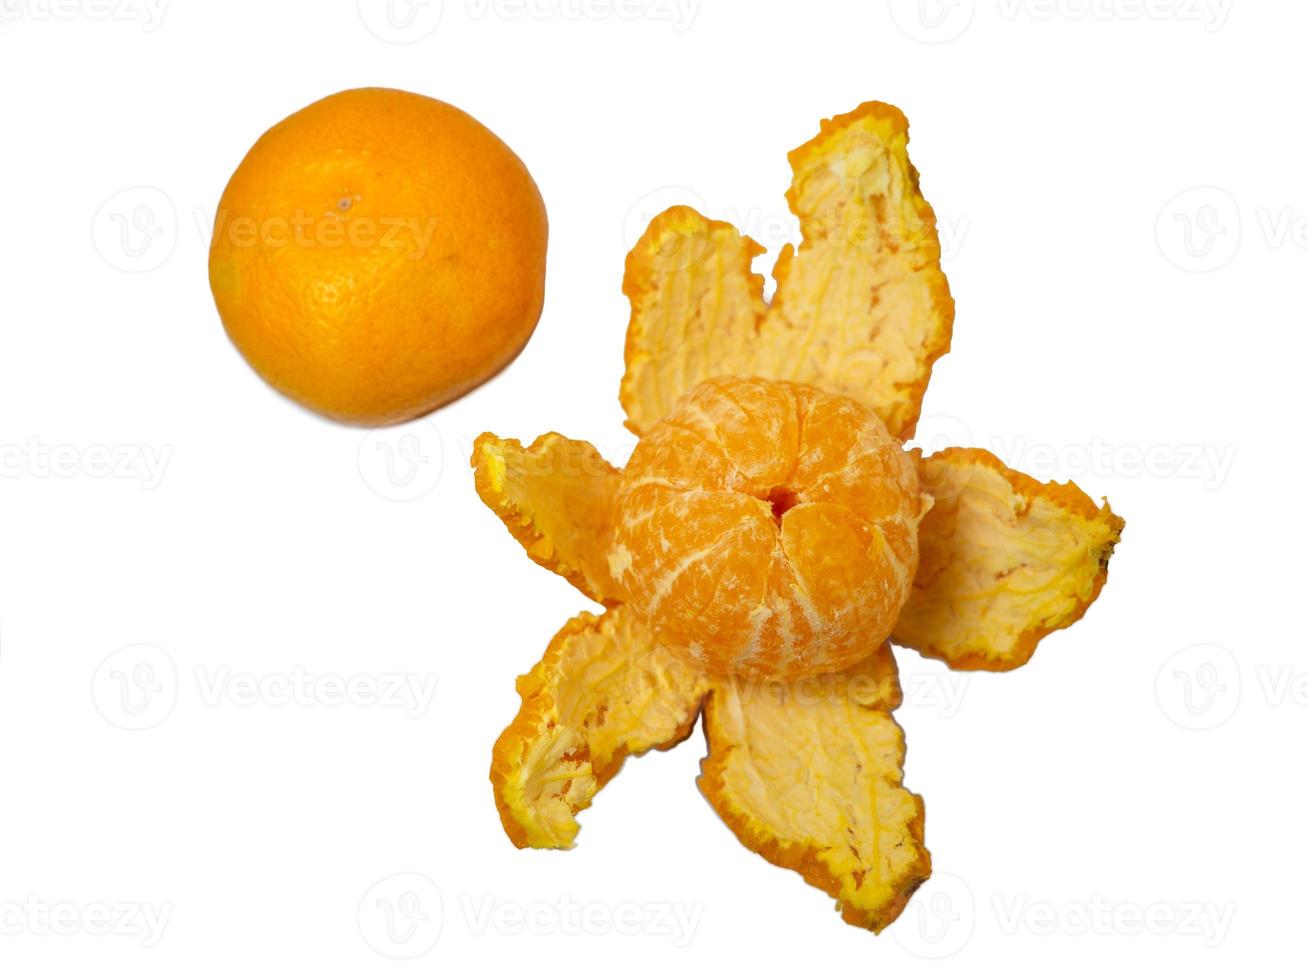 mezzo aperto mandarino e totale mandarino . peeling mandarino. foto